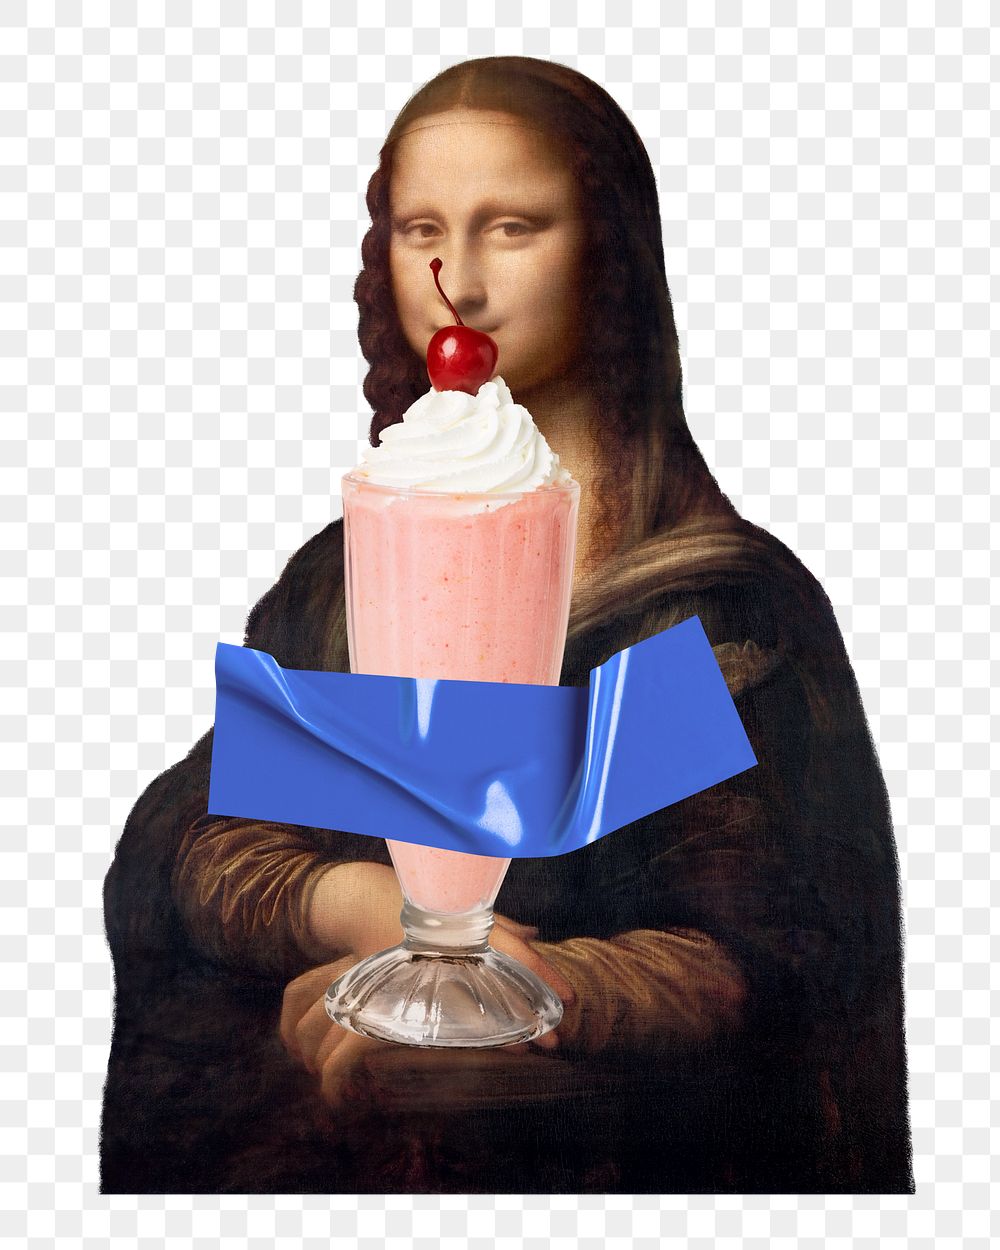 Milkshake png Mona Lisa sticker, Leonardo da Vinci's artwork mixed media transparent background. Remixed by rawpixel.